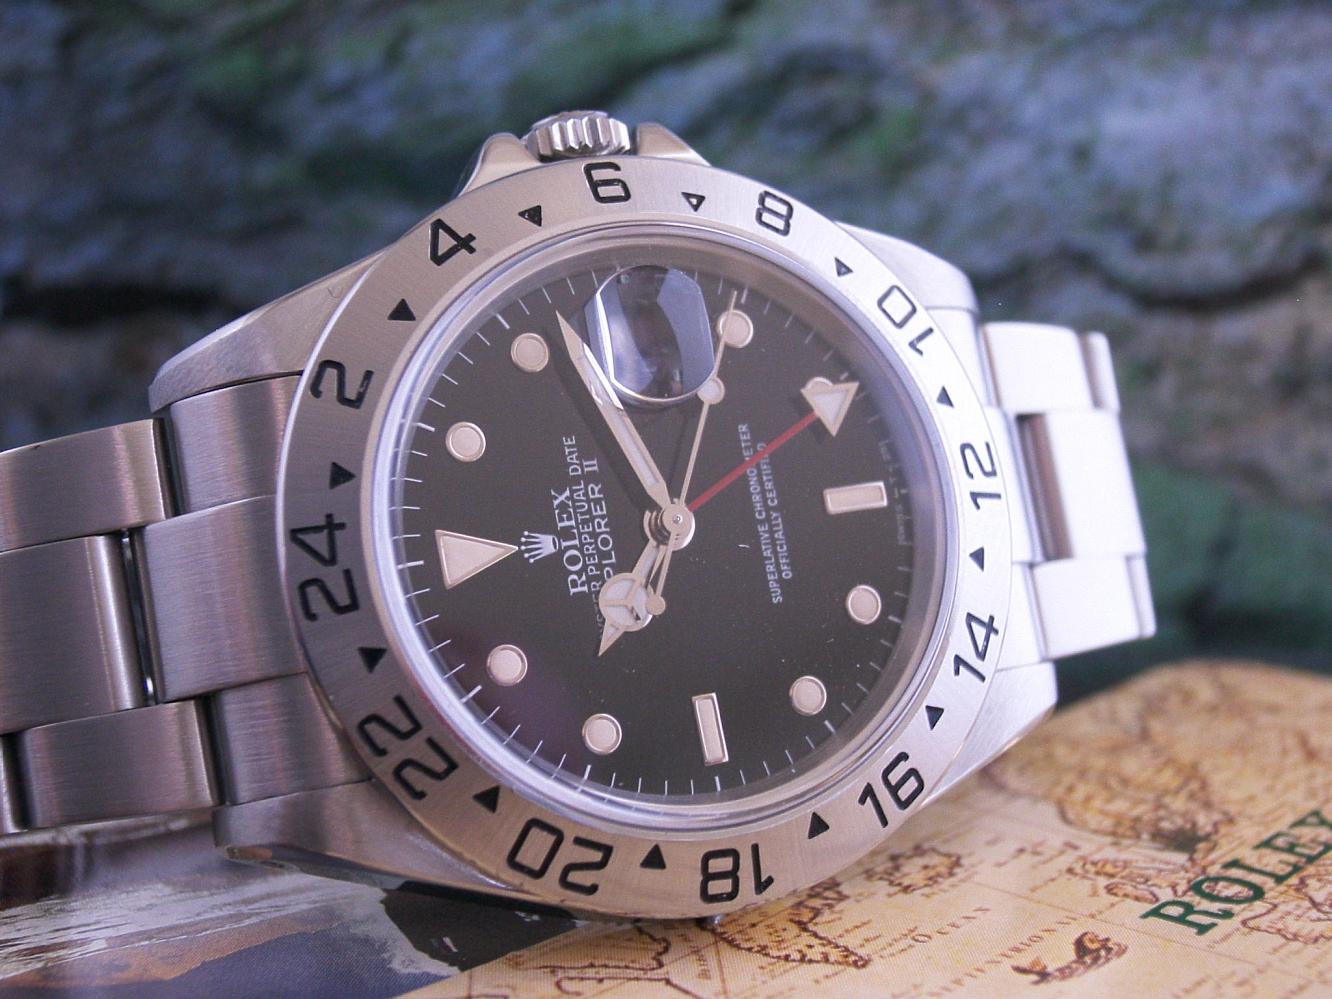 Rolex Explorer II LUXURY WATCH, expensive watch,designer watches